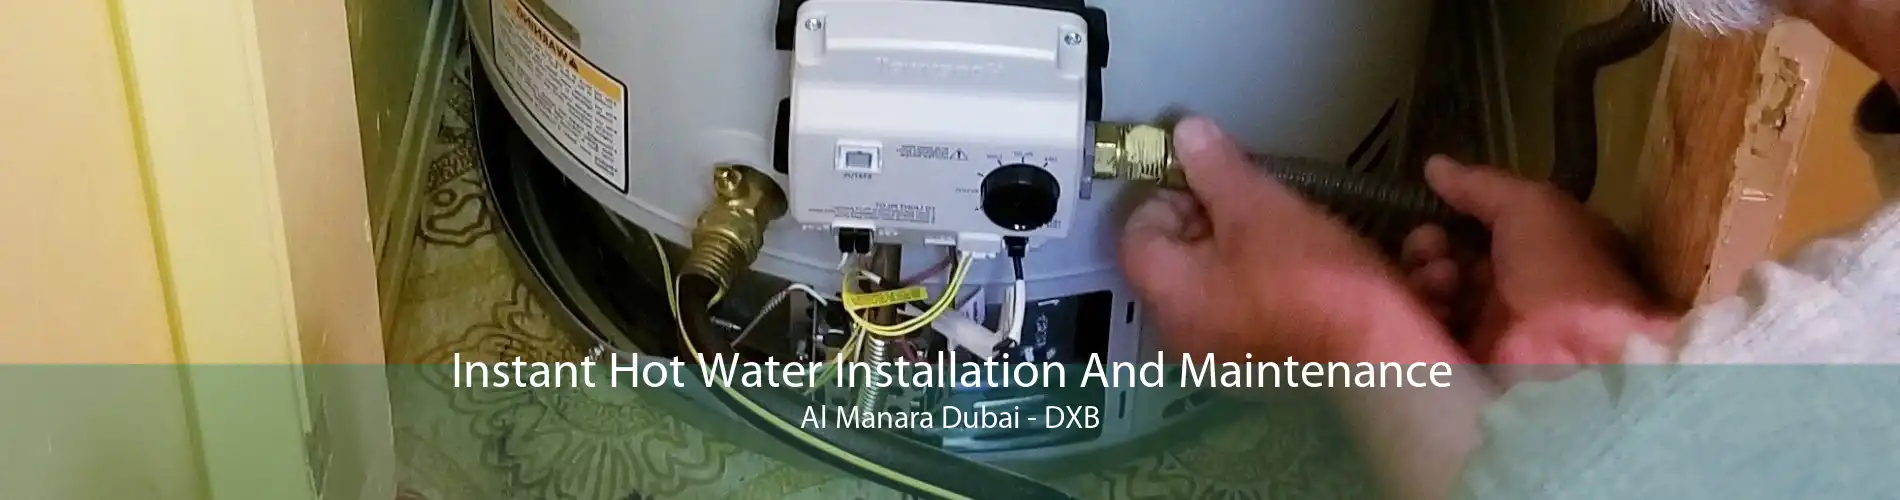 Instant Hot Water Installation And Maintenance Al Manara Dubai - DXB